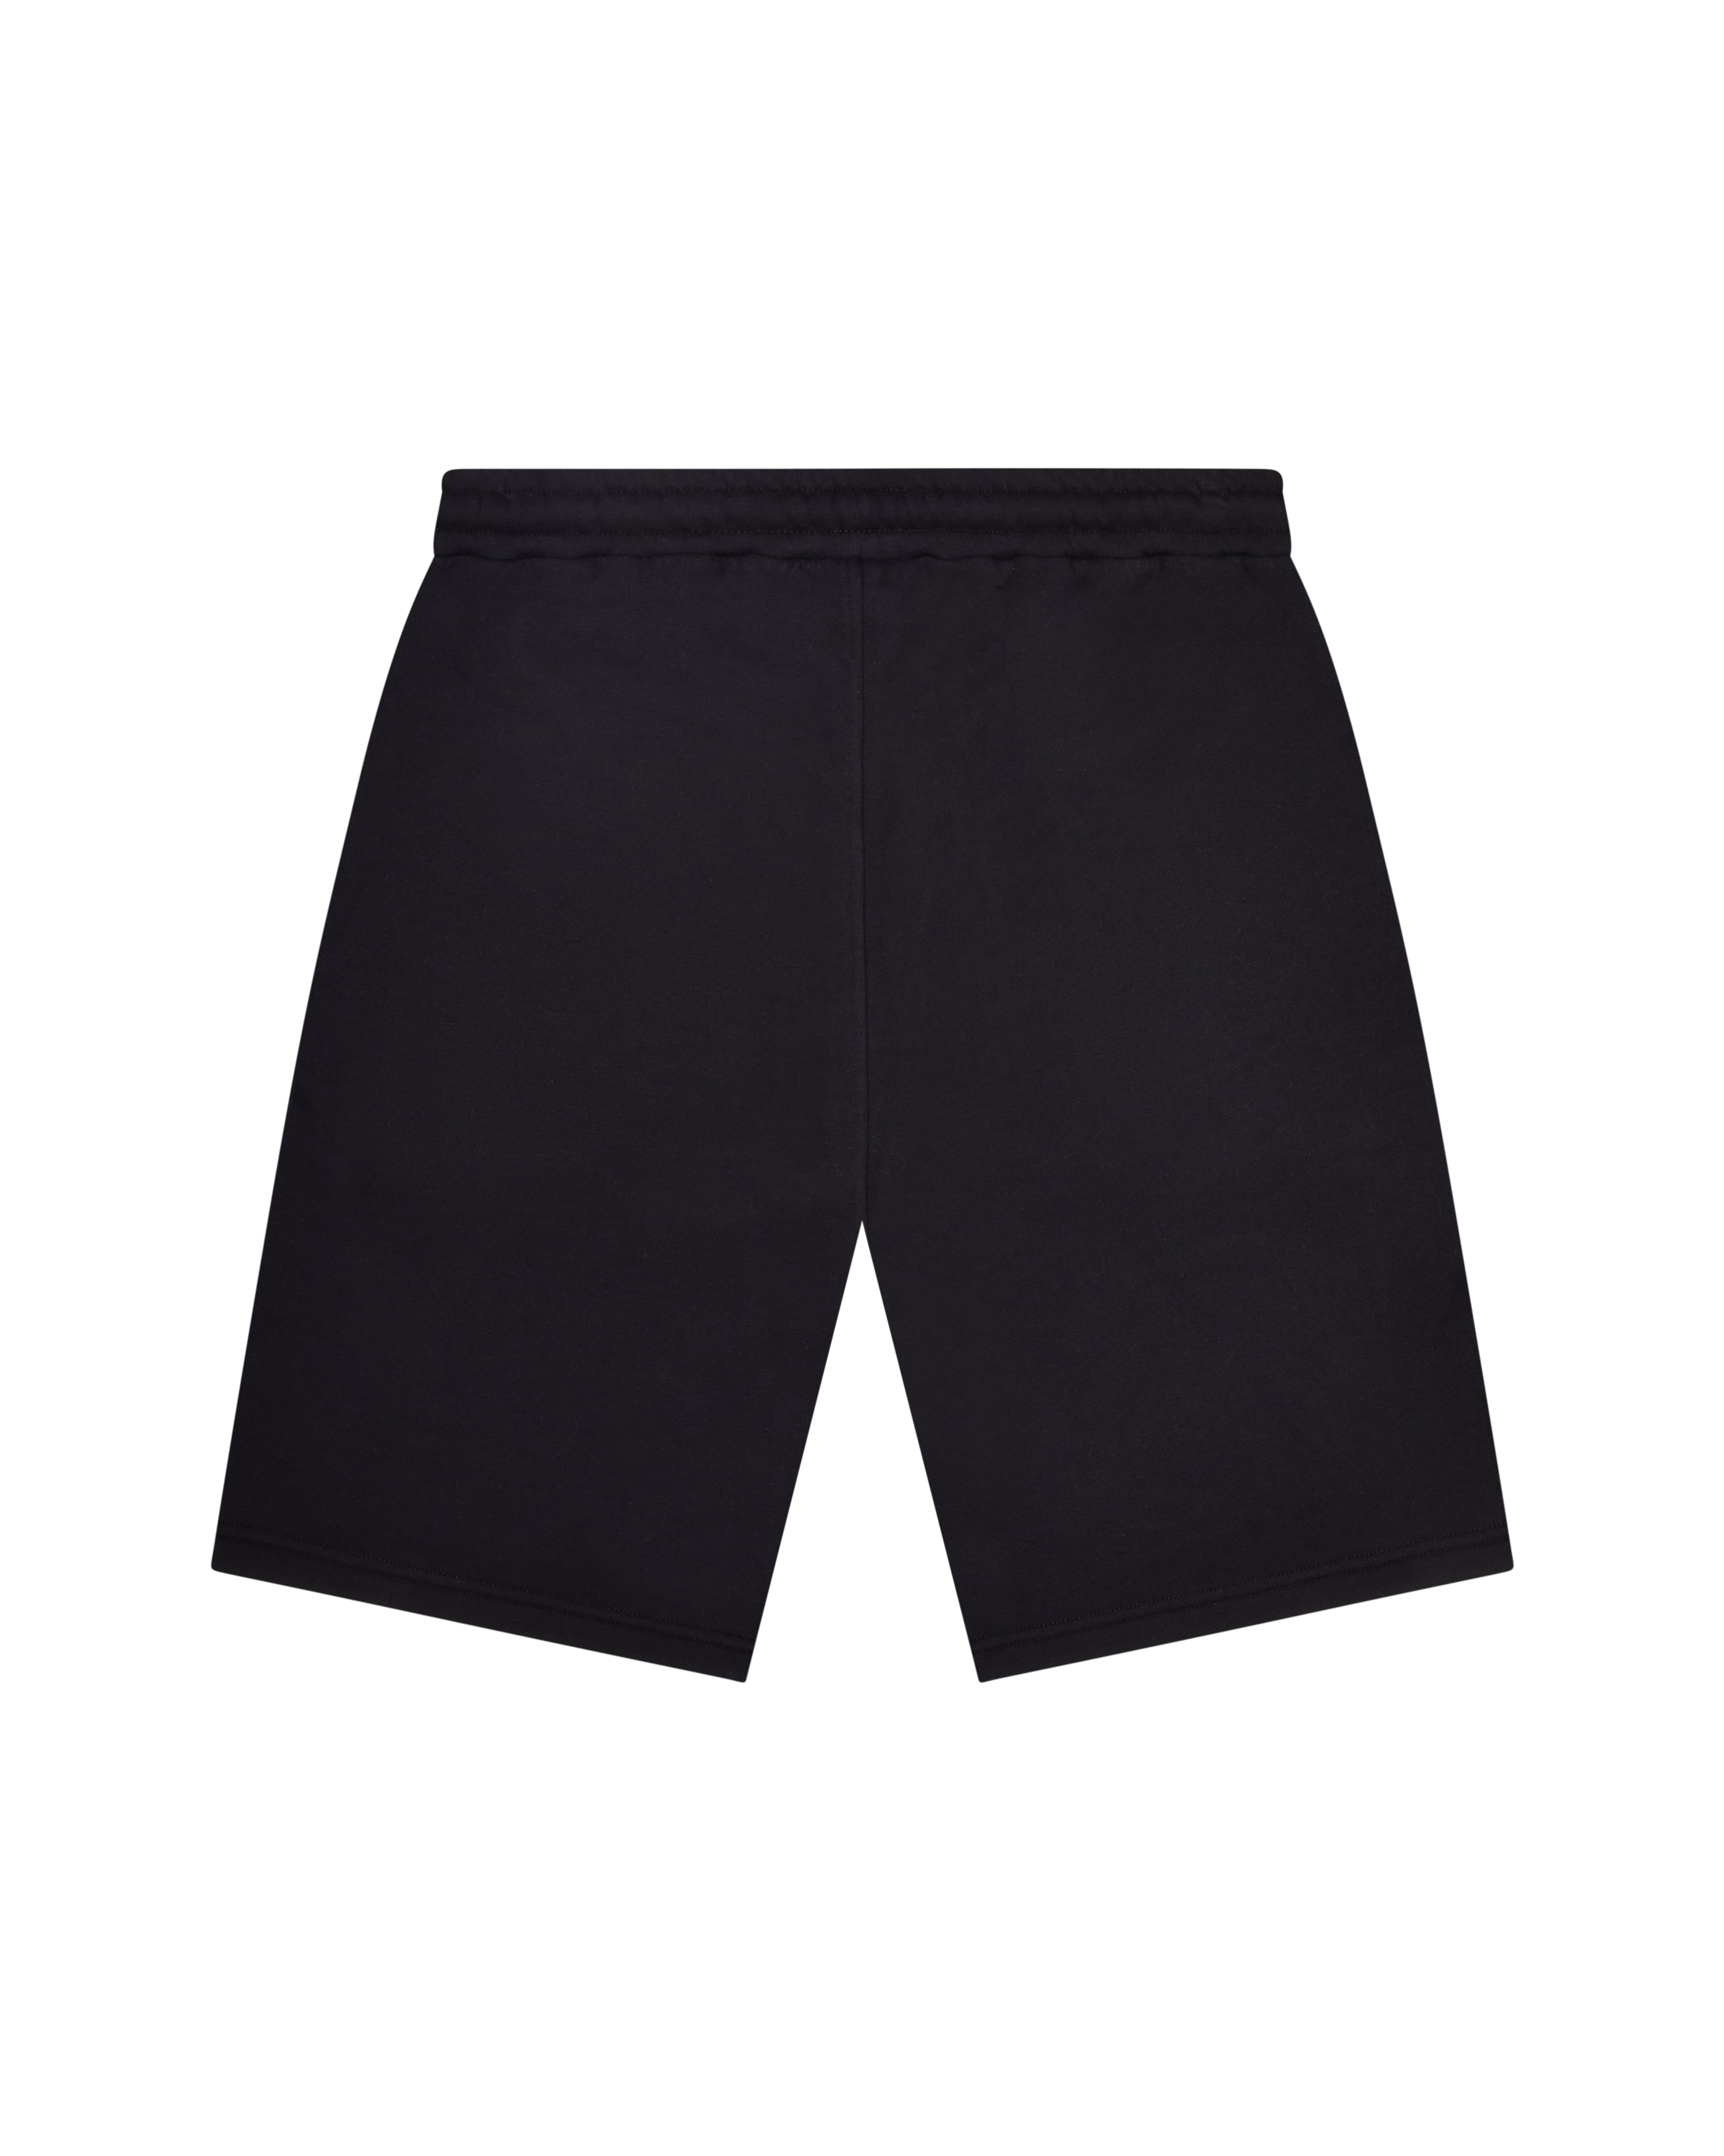 Irongate Arch Gel Shorts - Black/Blue